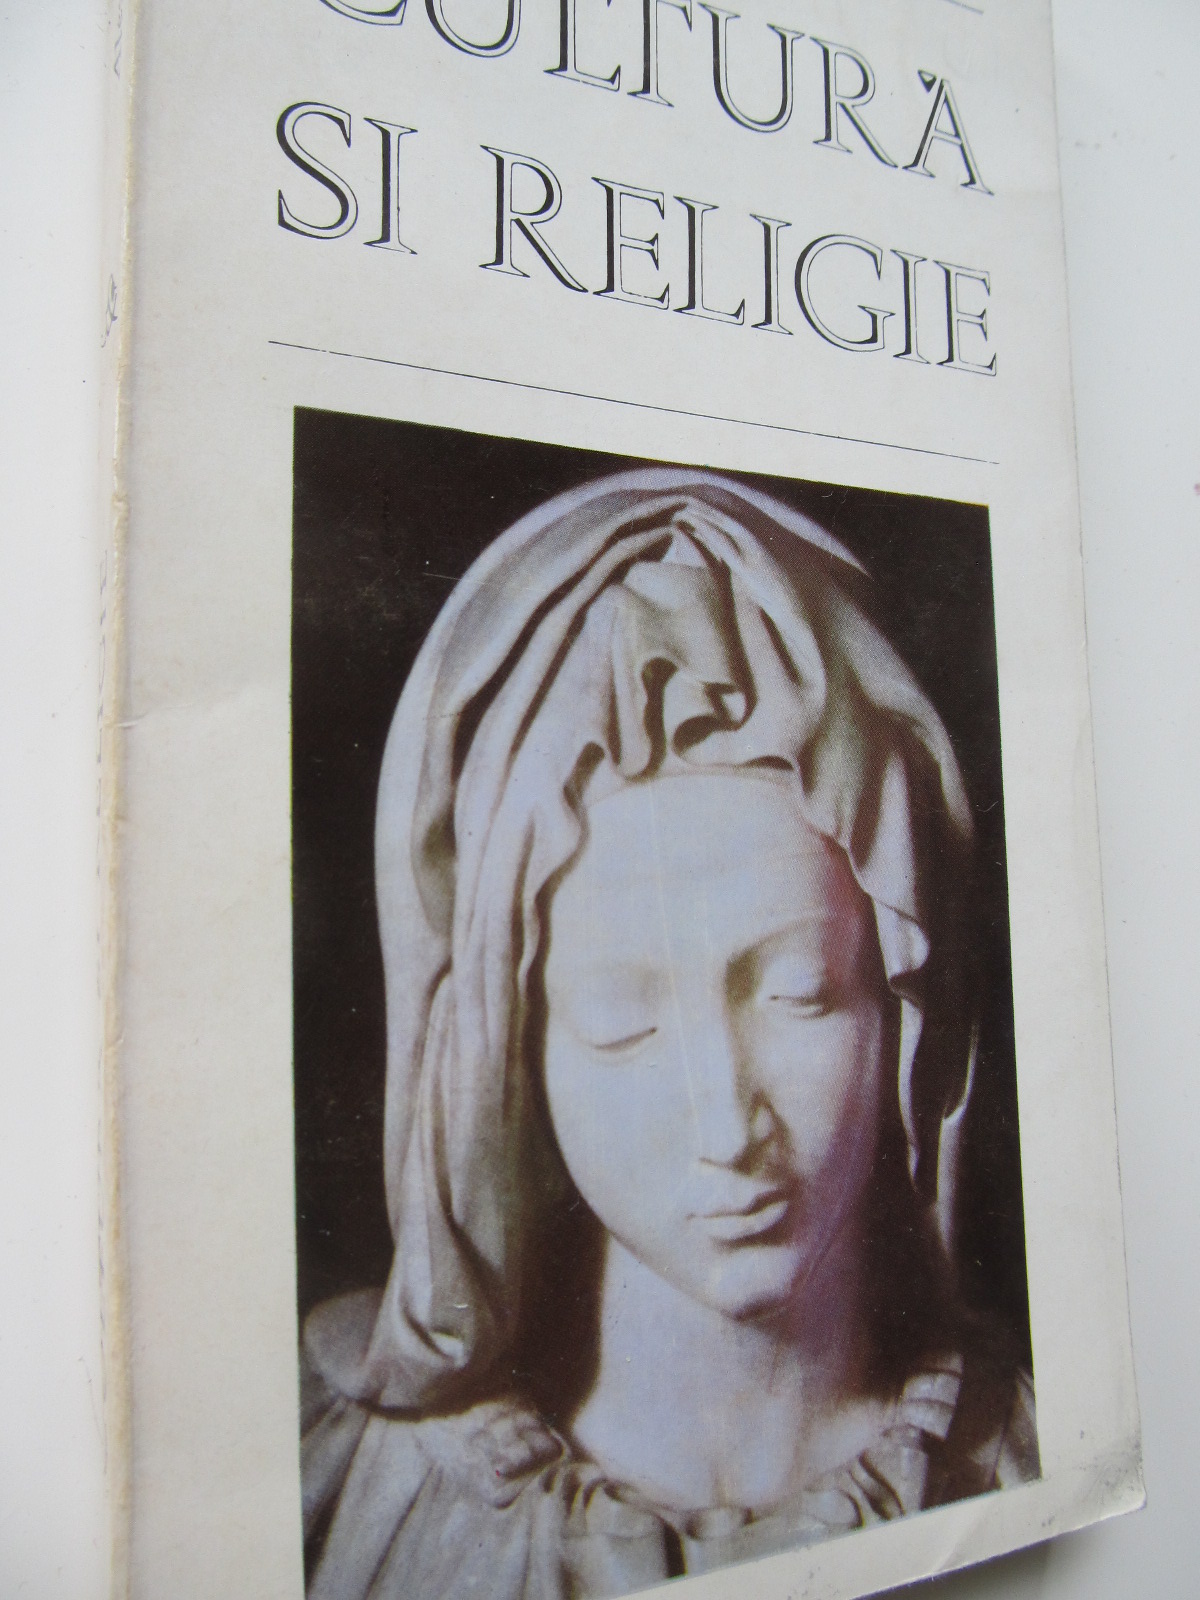 Cultura si religie - Al. Tanase | Detalii carte